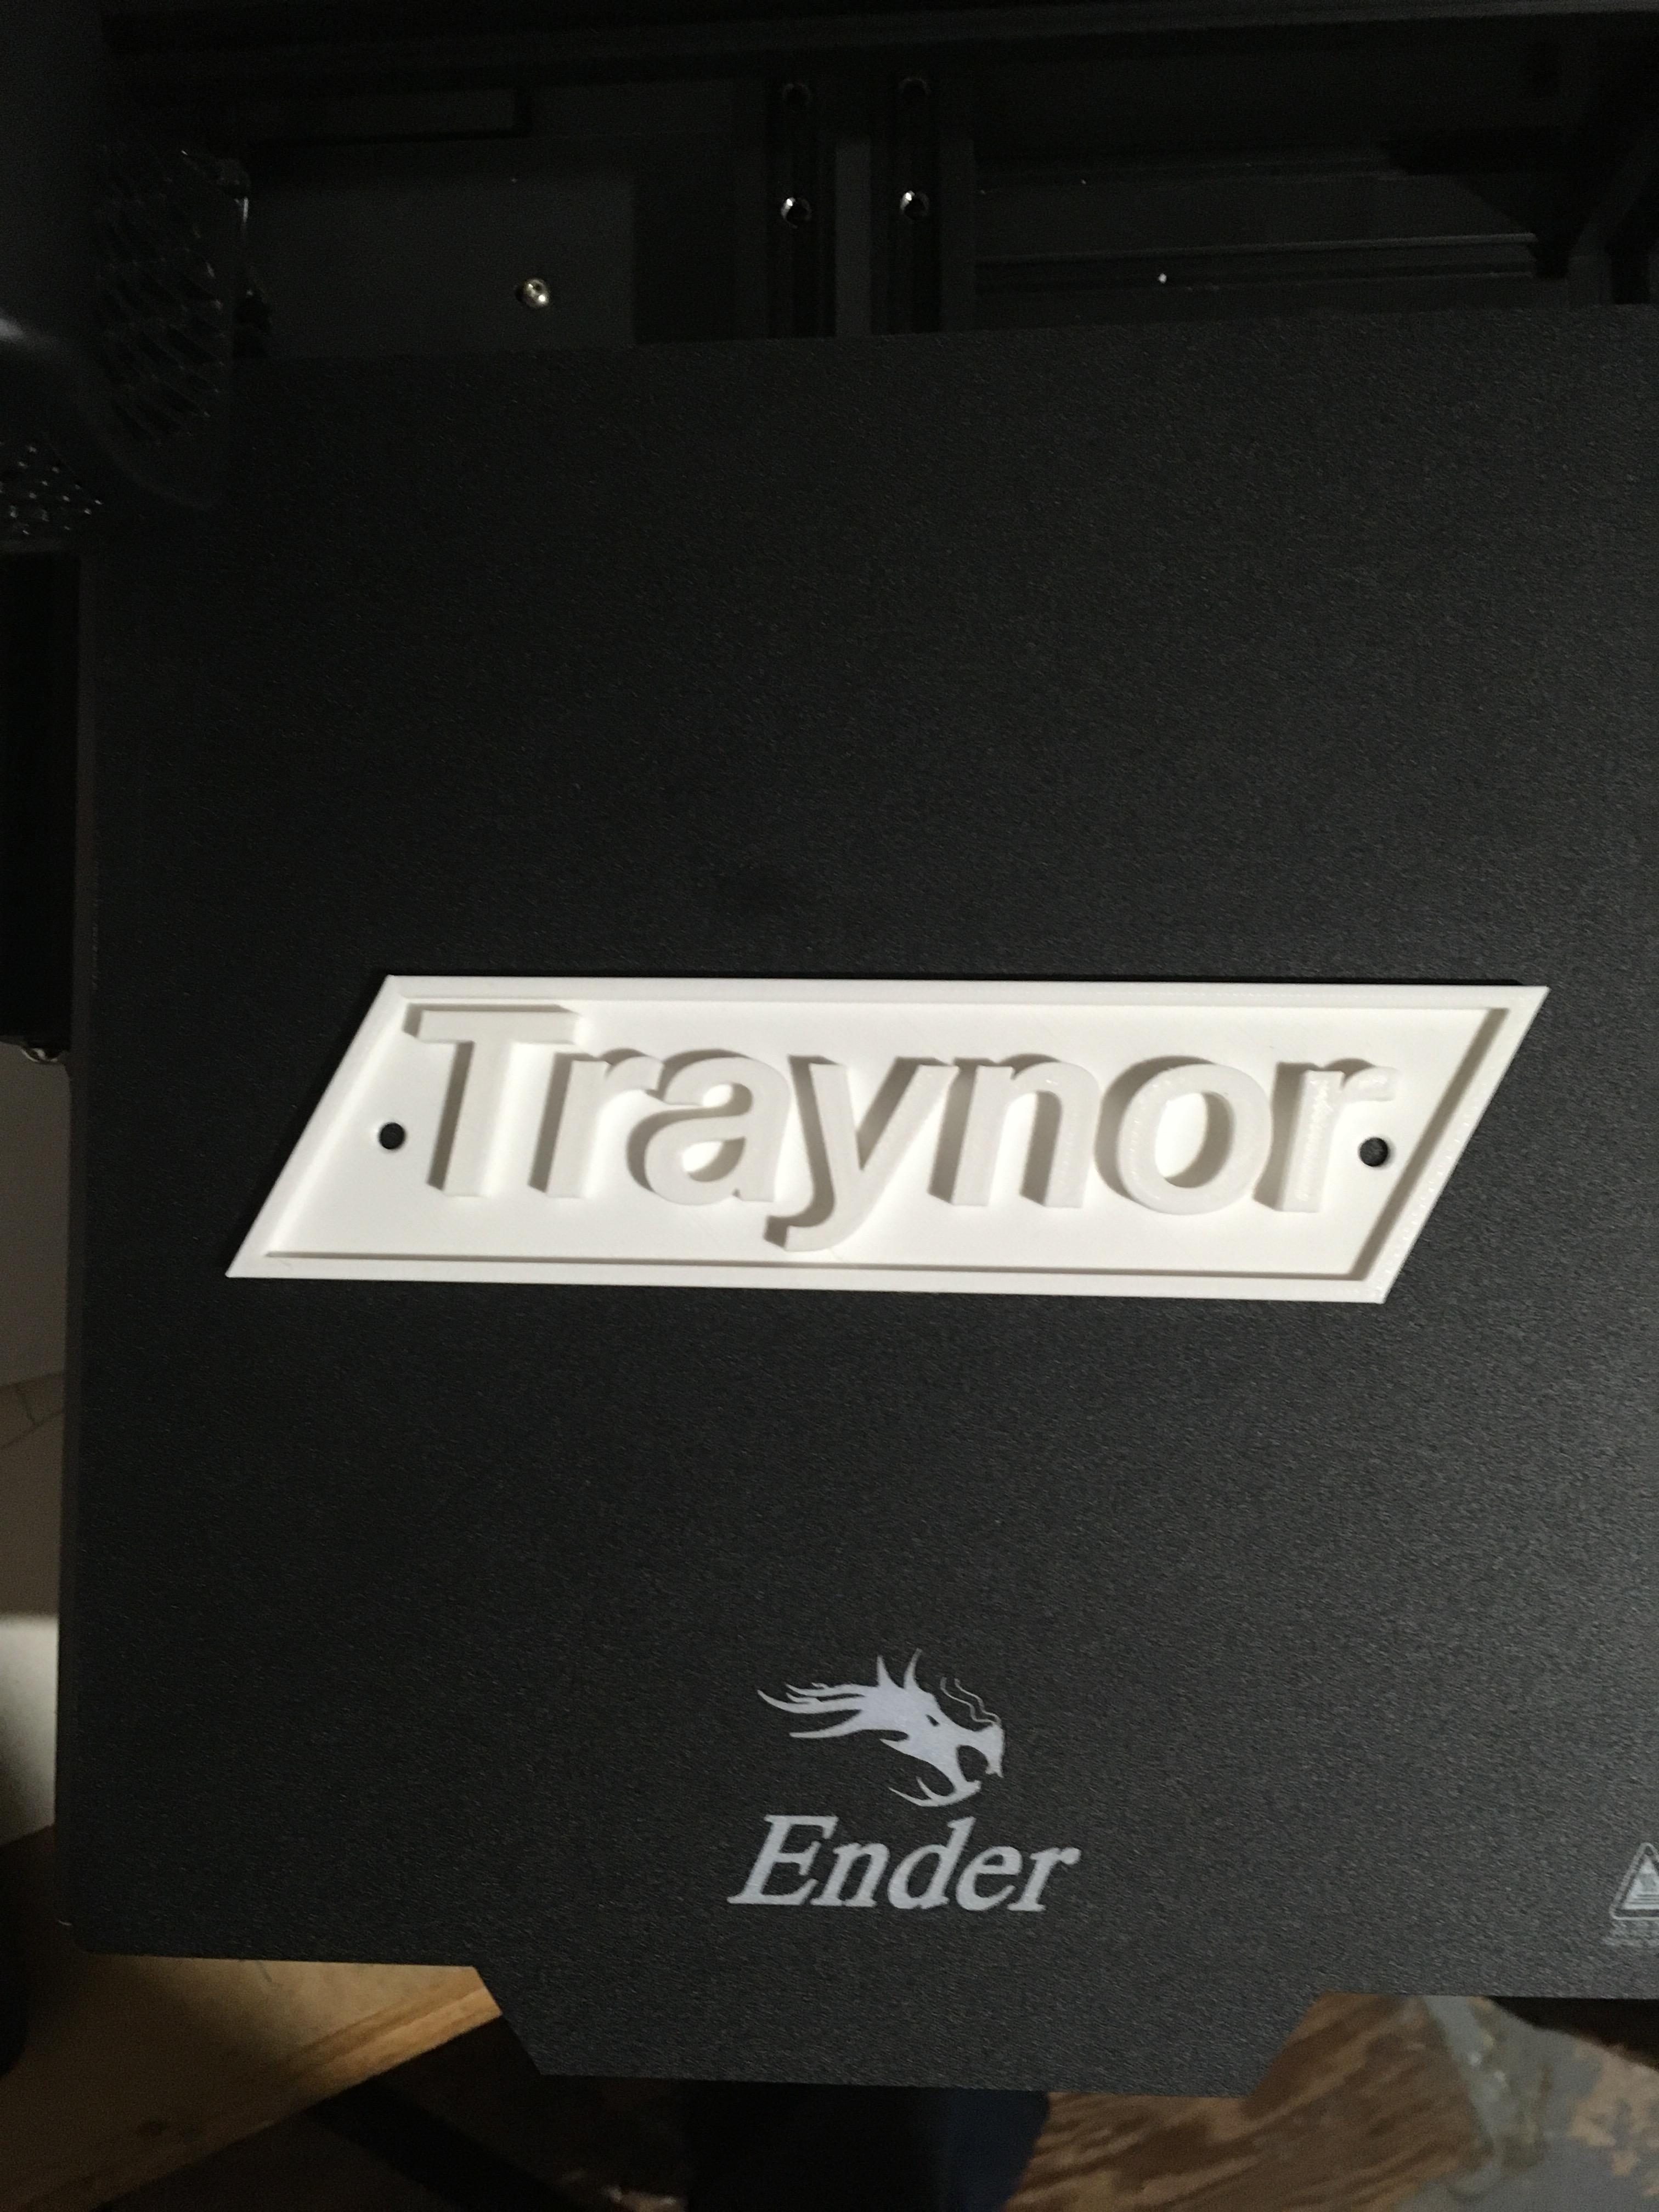 traynor logo.obj 3d model